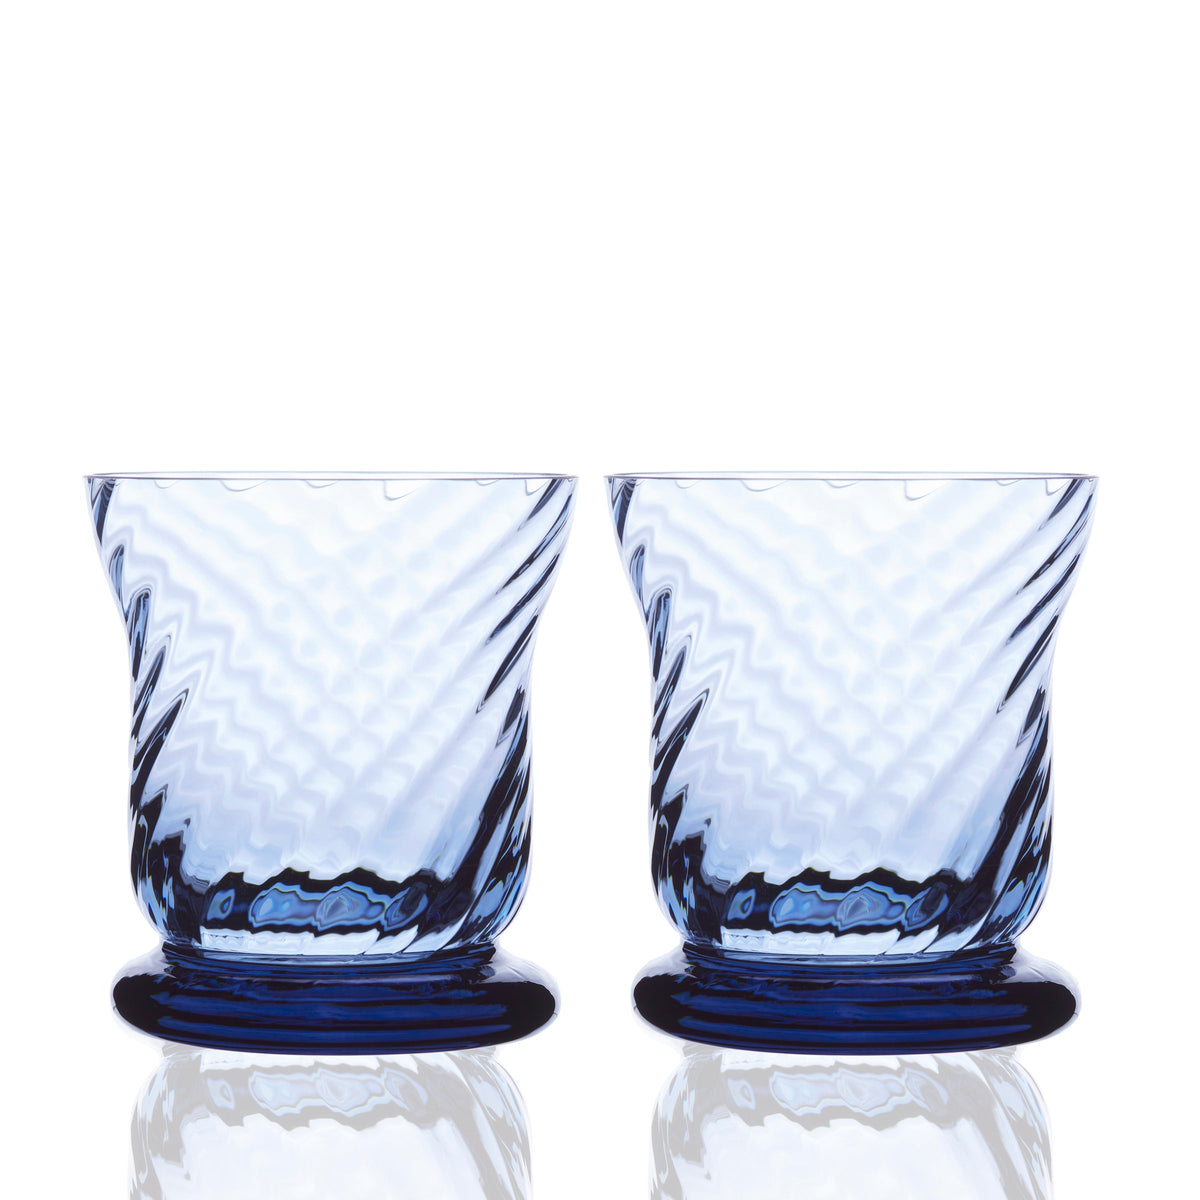 Ocean Votives Crystal Candleholders Set of 2 in Blue from Caskata